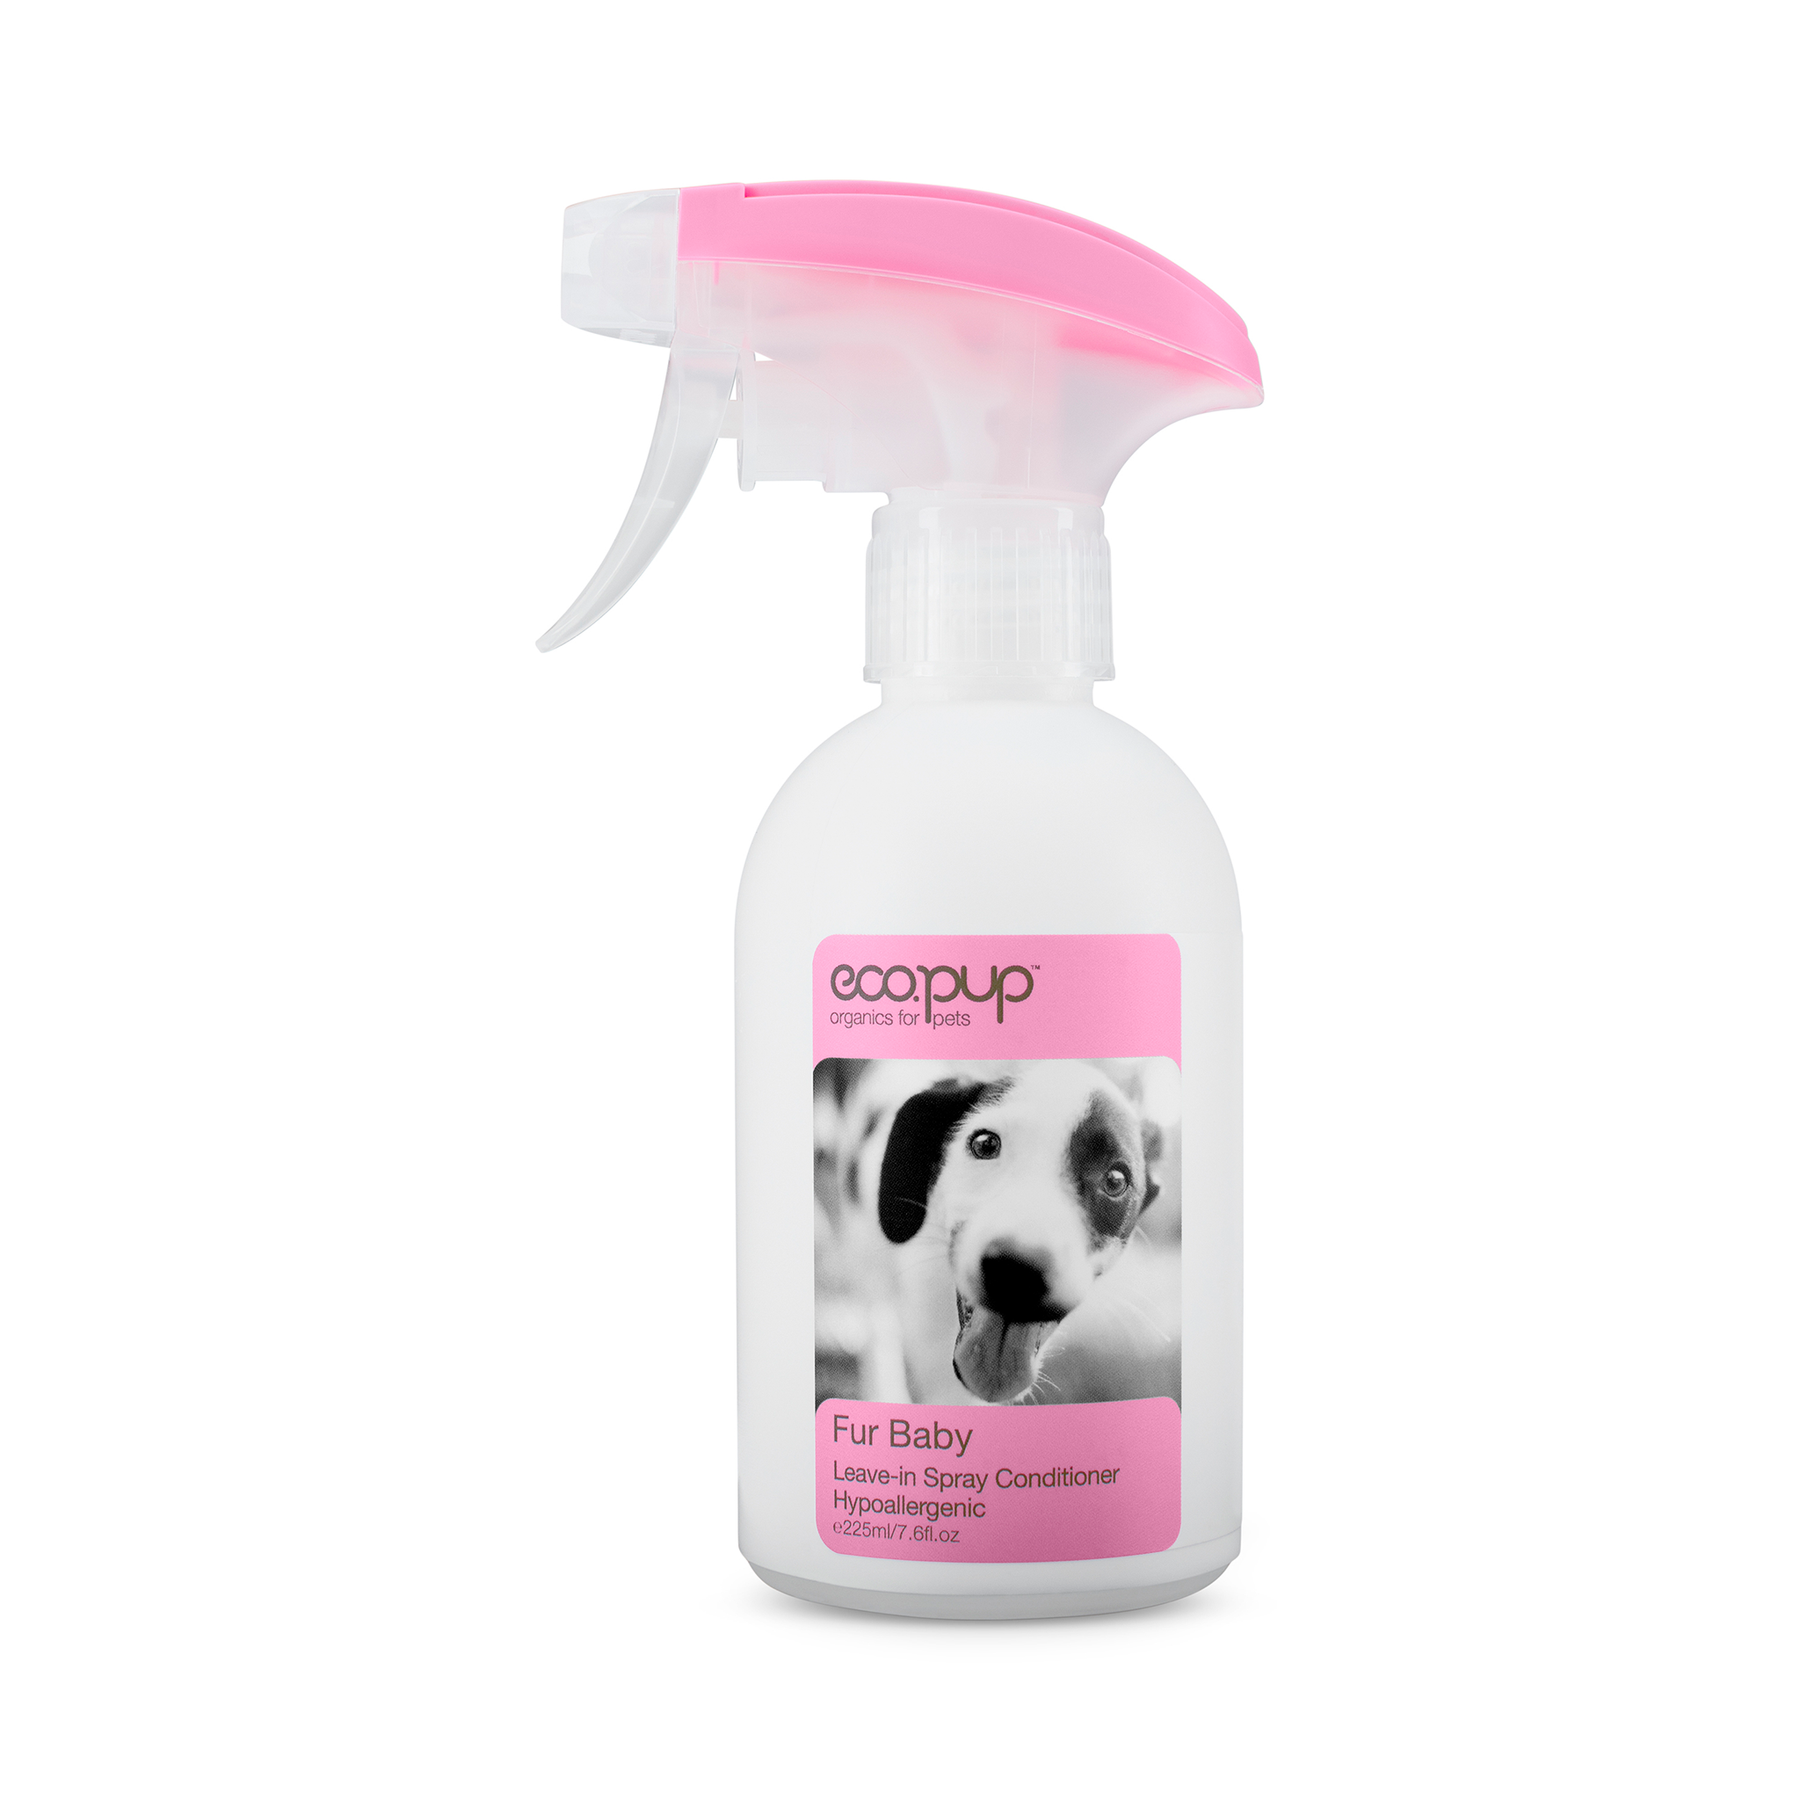 eco.pup Fur Baby Leave-in Spray Conditioner